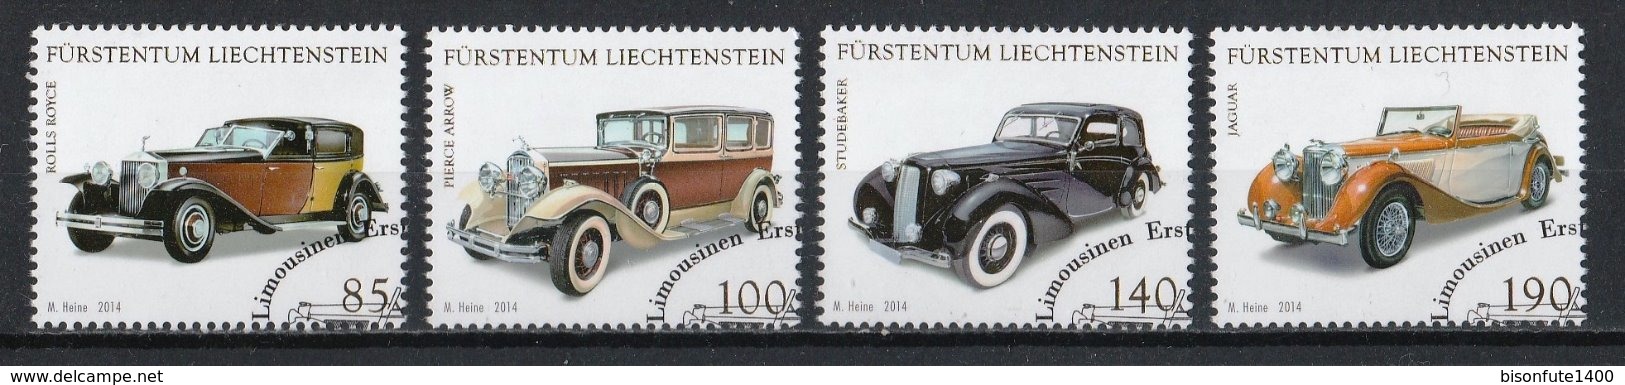 Liechtenstein 2014 : Timbres Yvert & Tellier N° 1666 - 1667 - 1668 Et 1669 Avec Oblit. Rondes. - Gebruikt